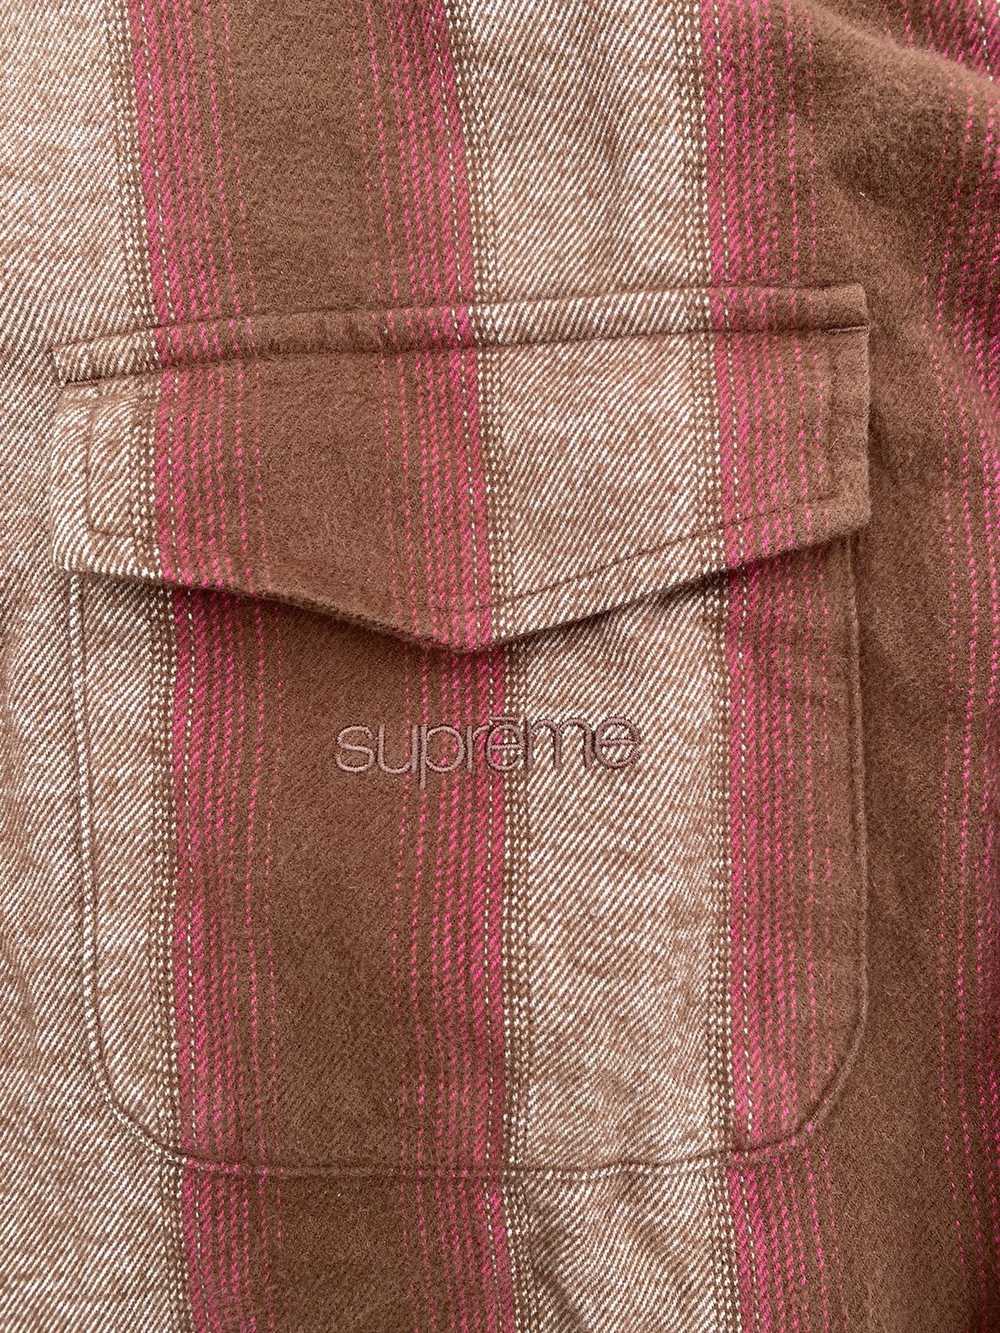 Supreme Stripe Flannel Zip Up - image 4